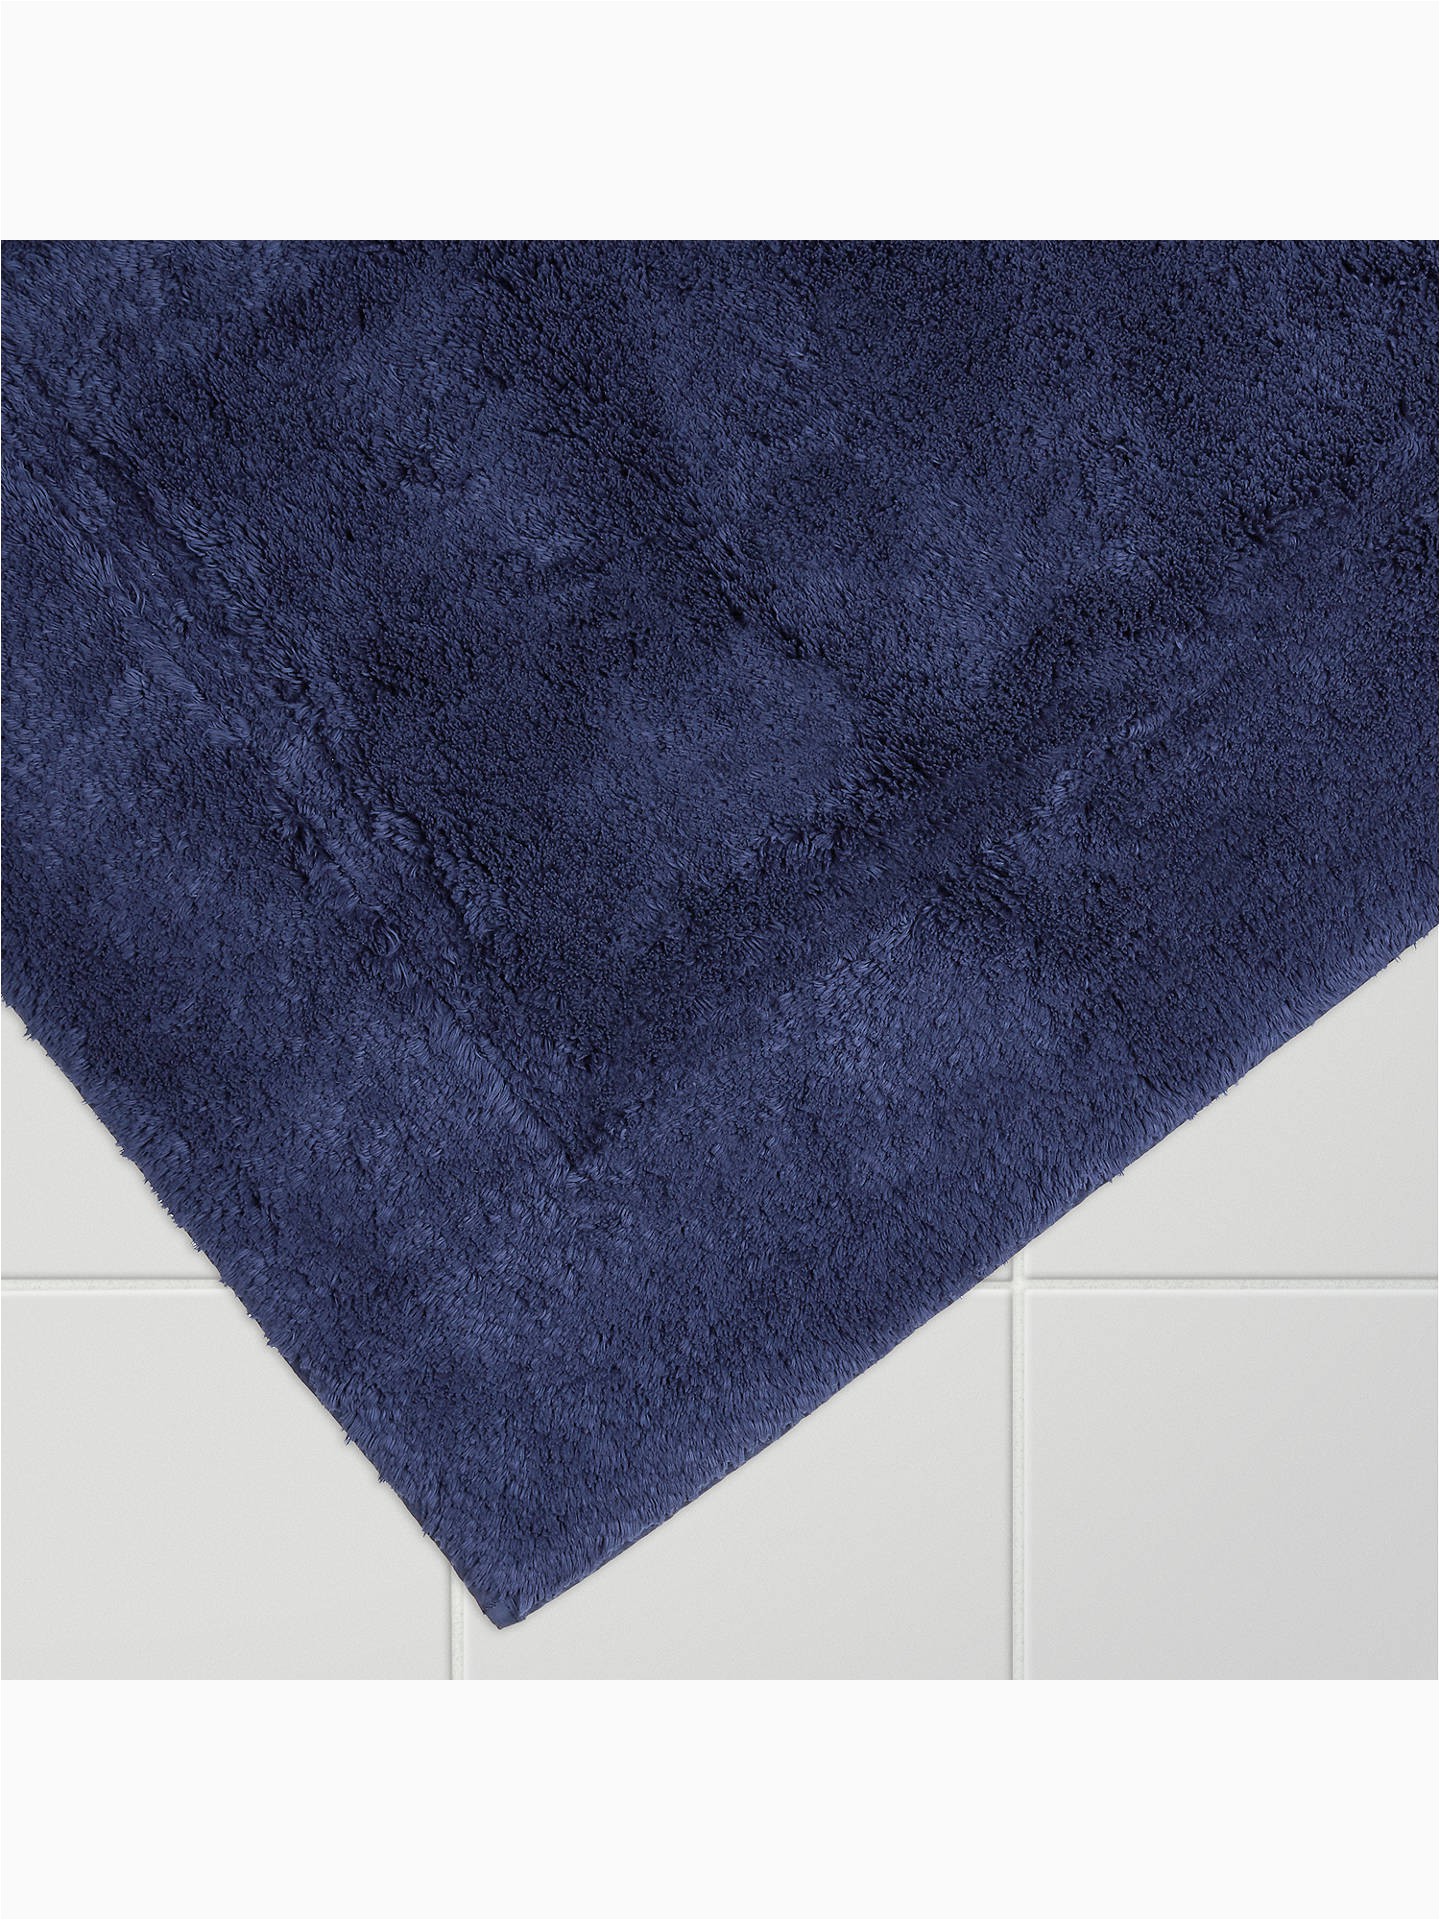 Large Blue Bathroom Rug John Lewis Egyptian Cotton Extra Deep Pile Bath Mat